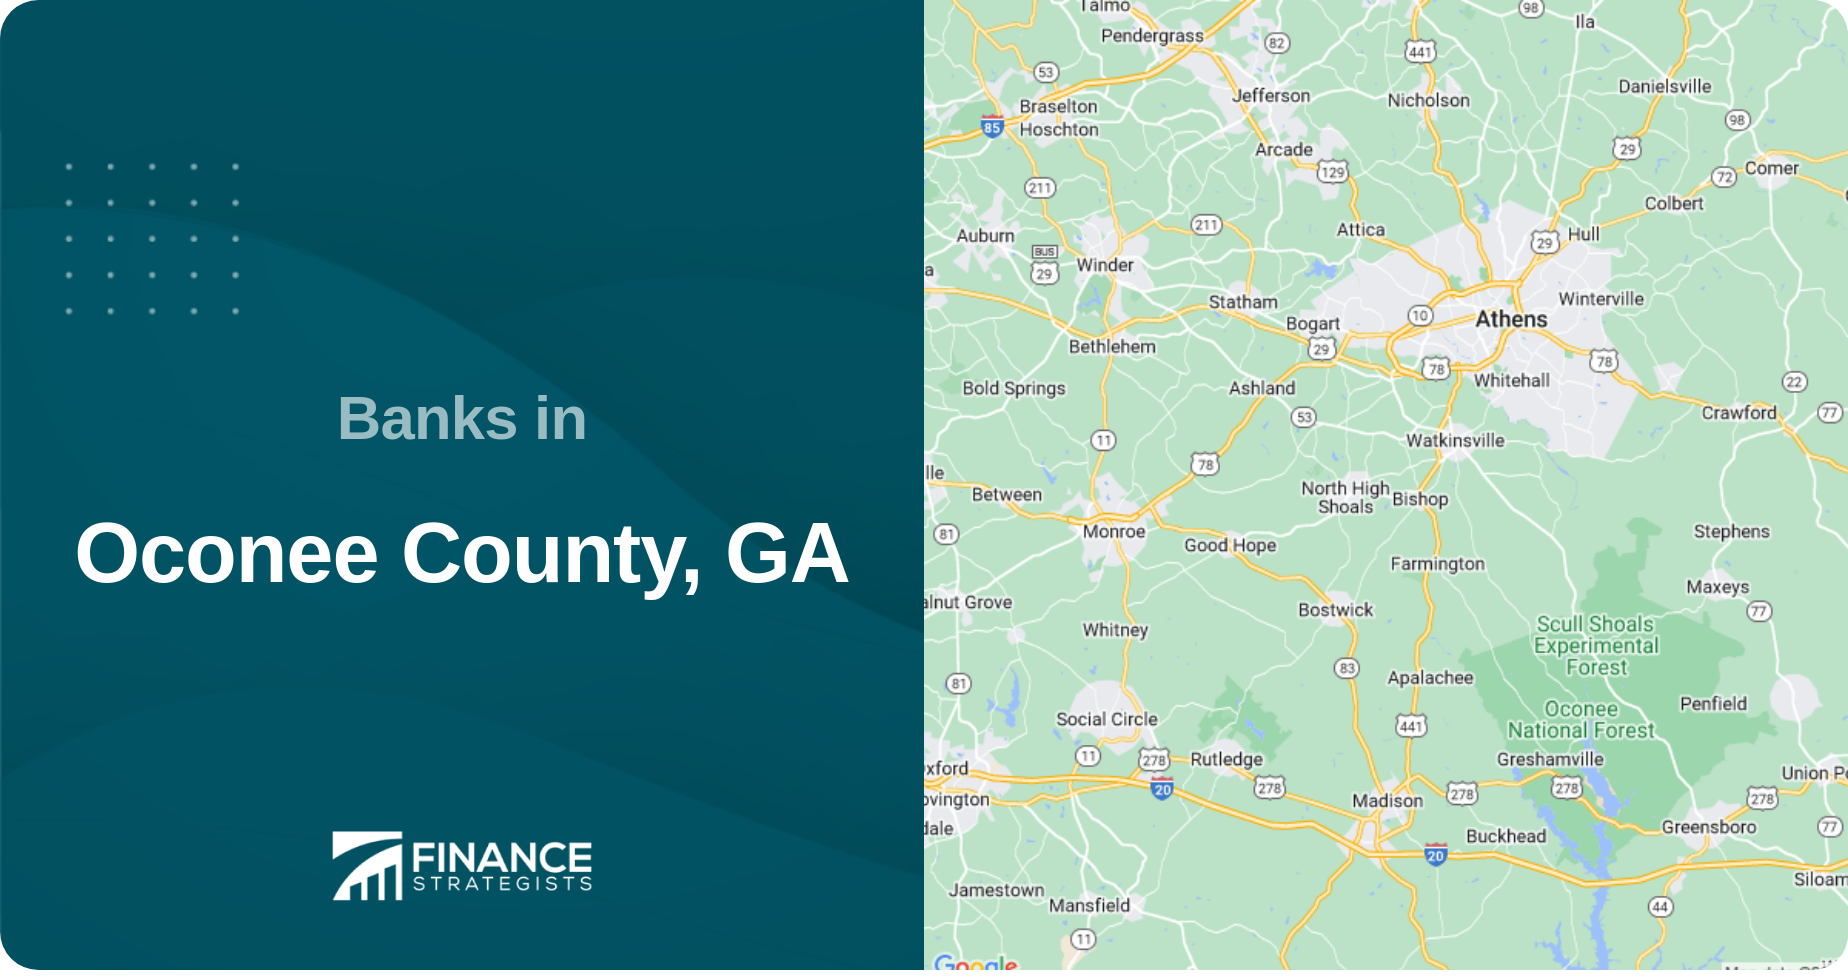 Banks in Oconee County, GA